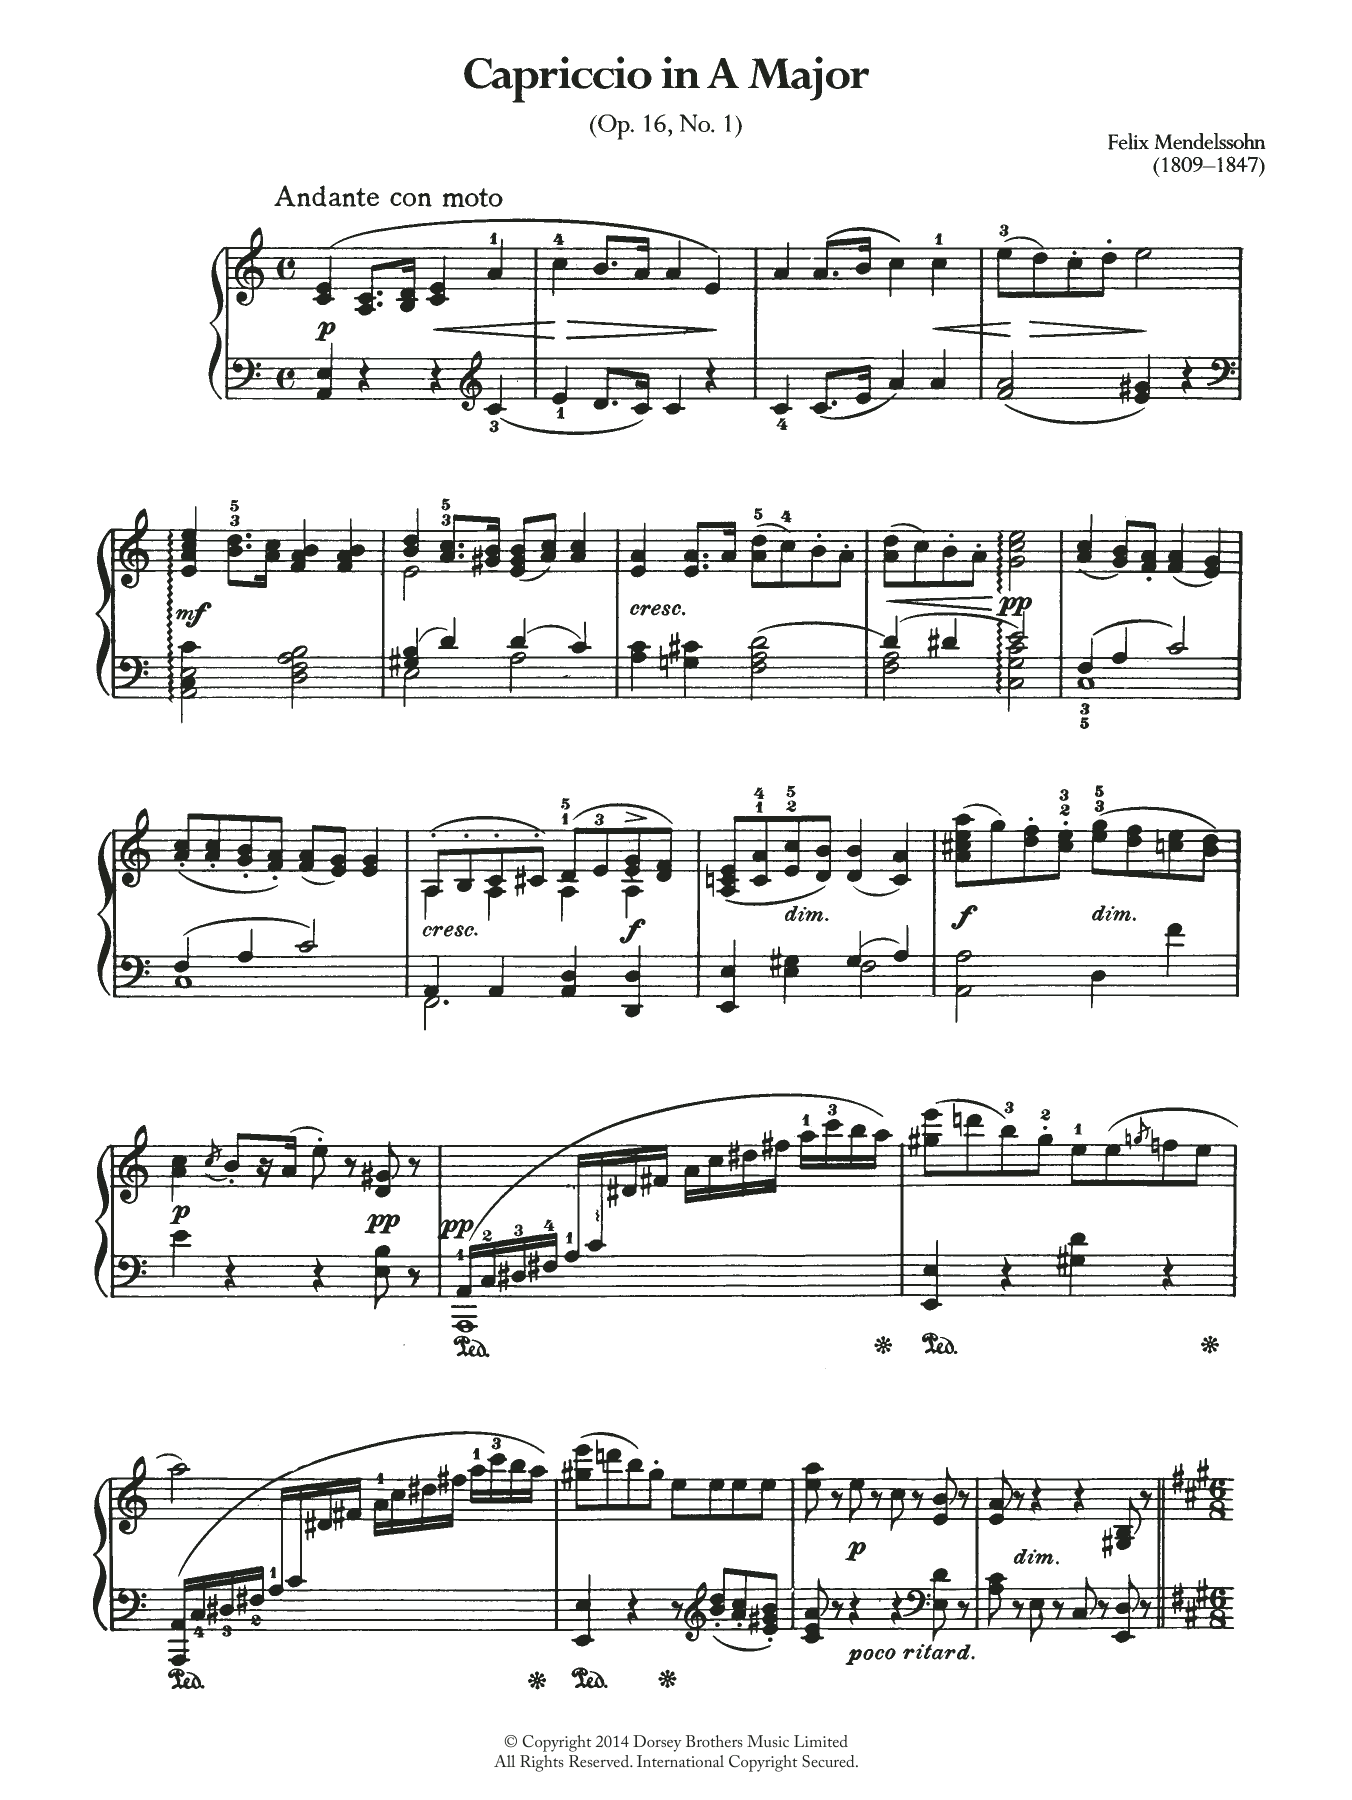 Felix Mendelssohn Capriccio In A Major Sheet Music Notes & Chords for Piano - Download or Print PDF